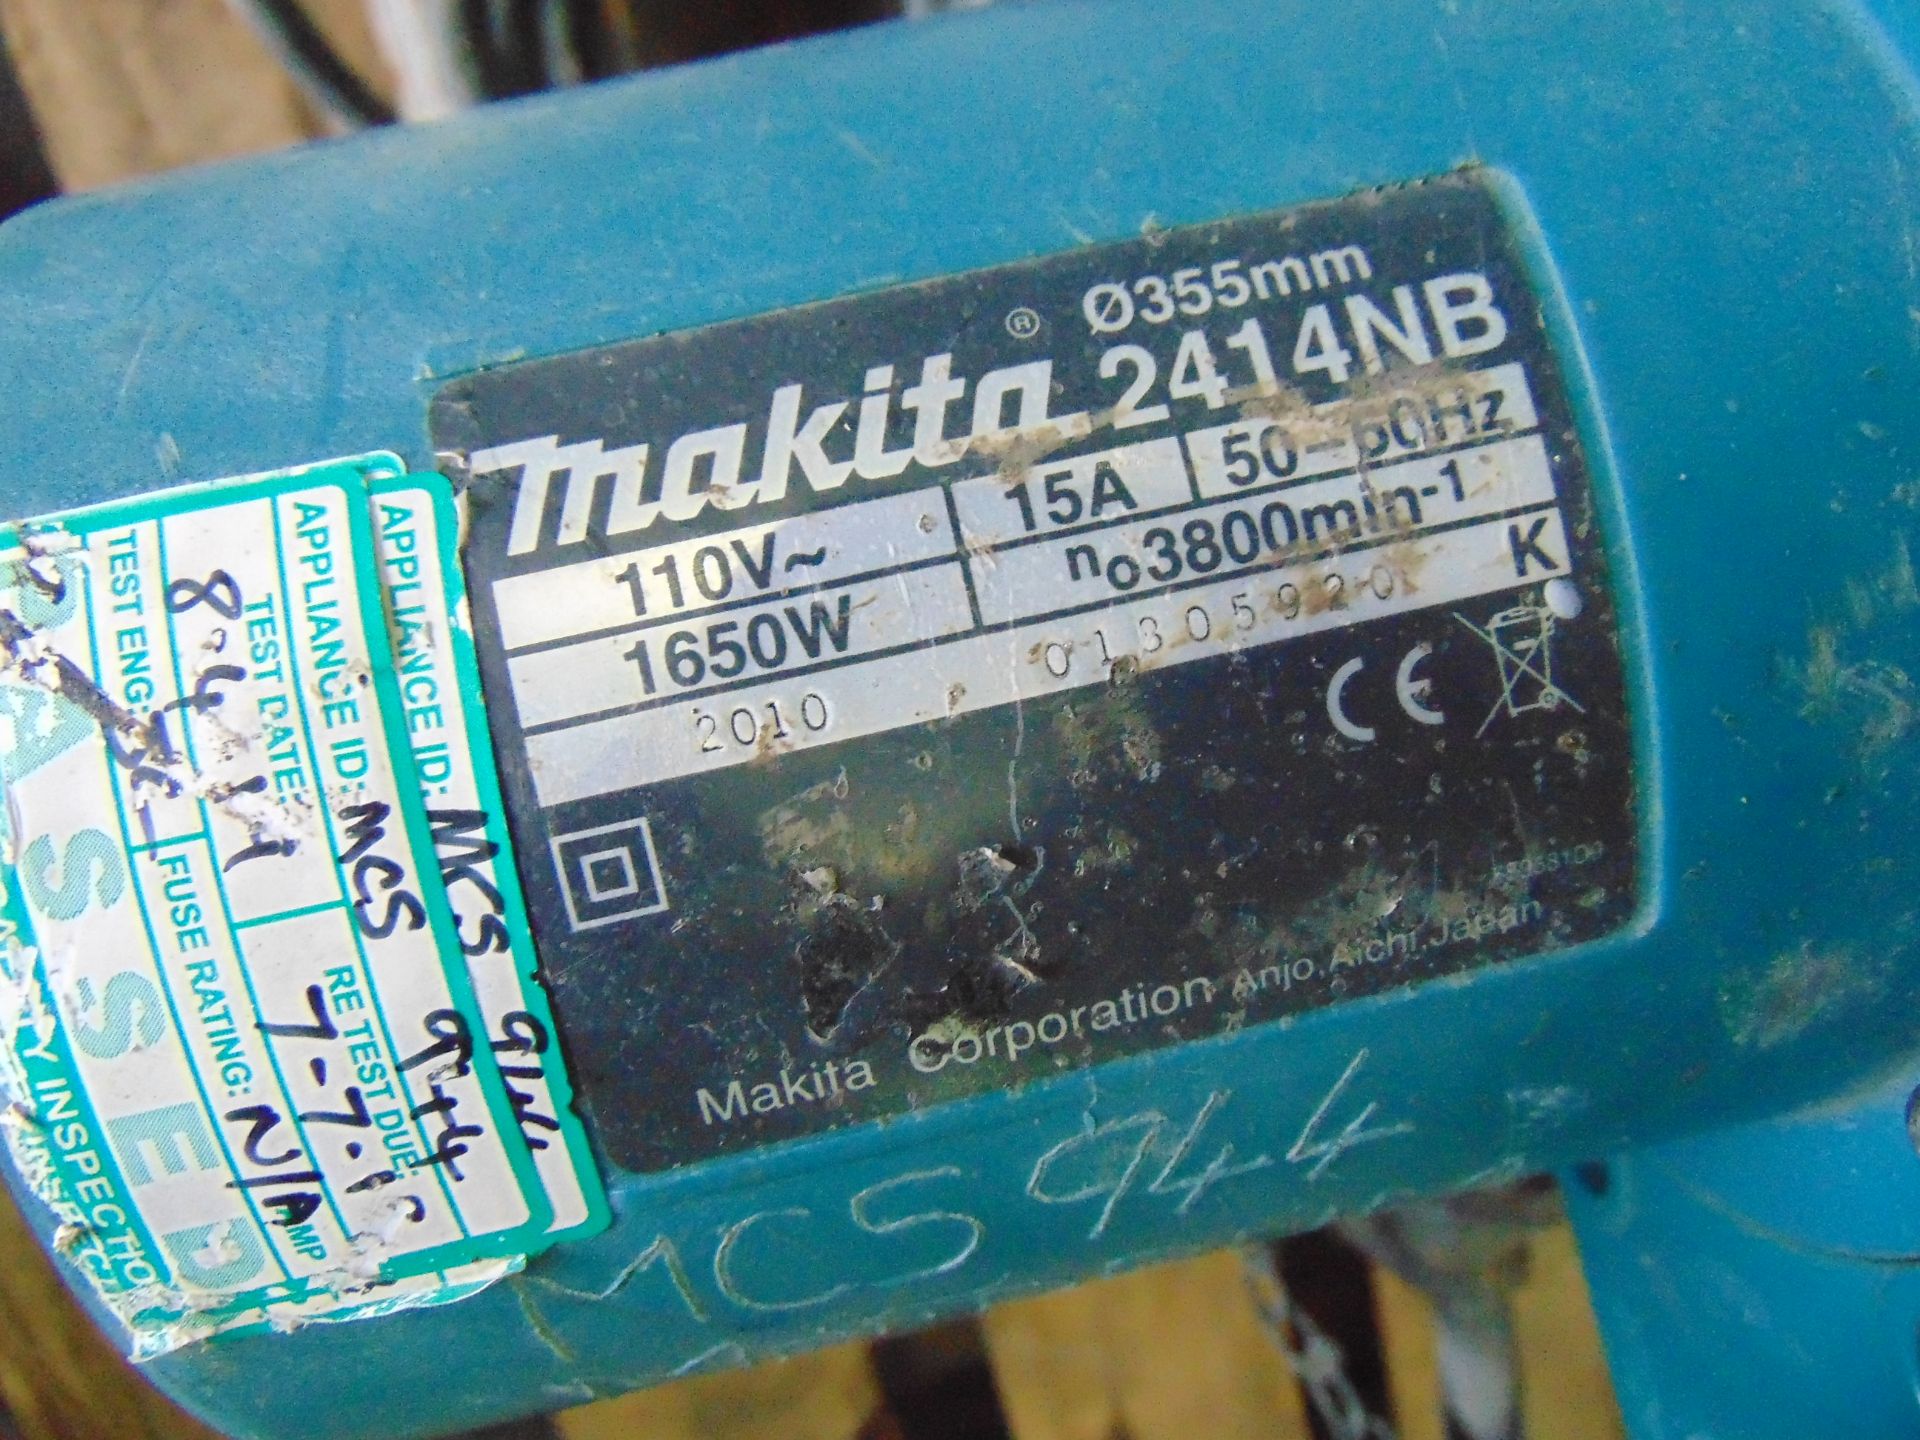 Makita 2414NB Metal Cutting CHOP Saw 110v - Image 7 of 7